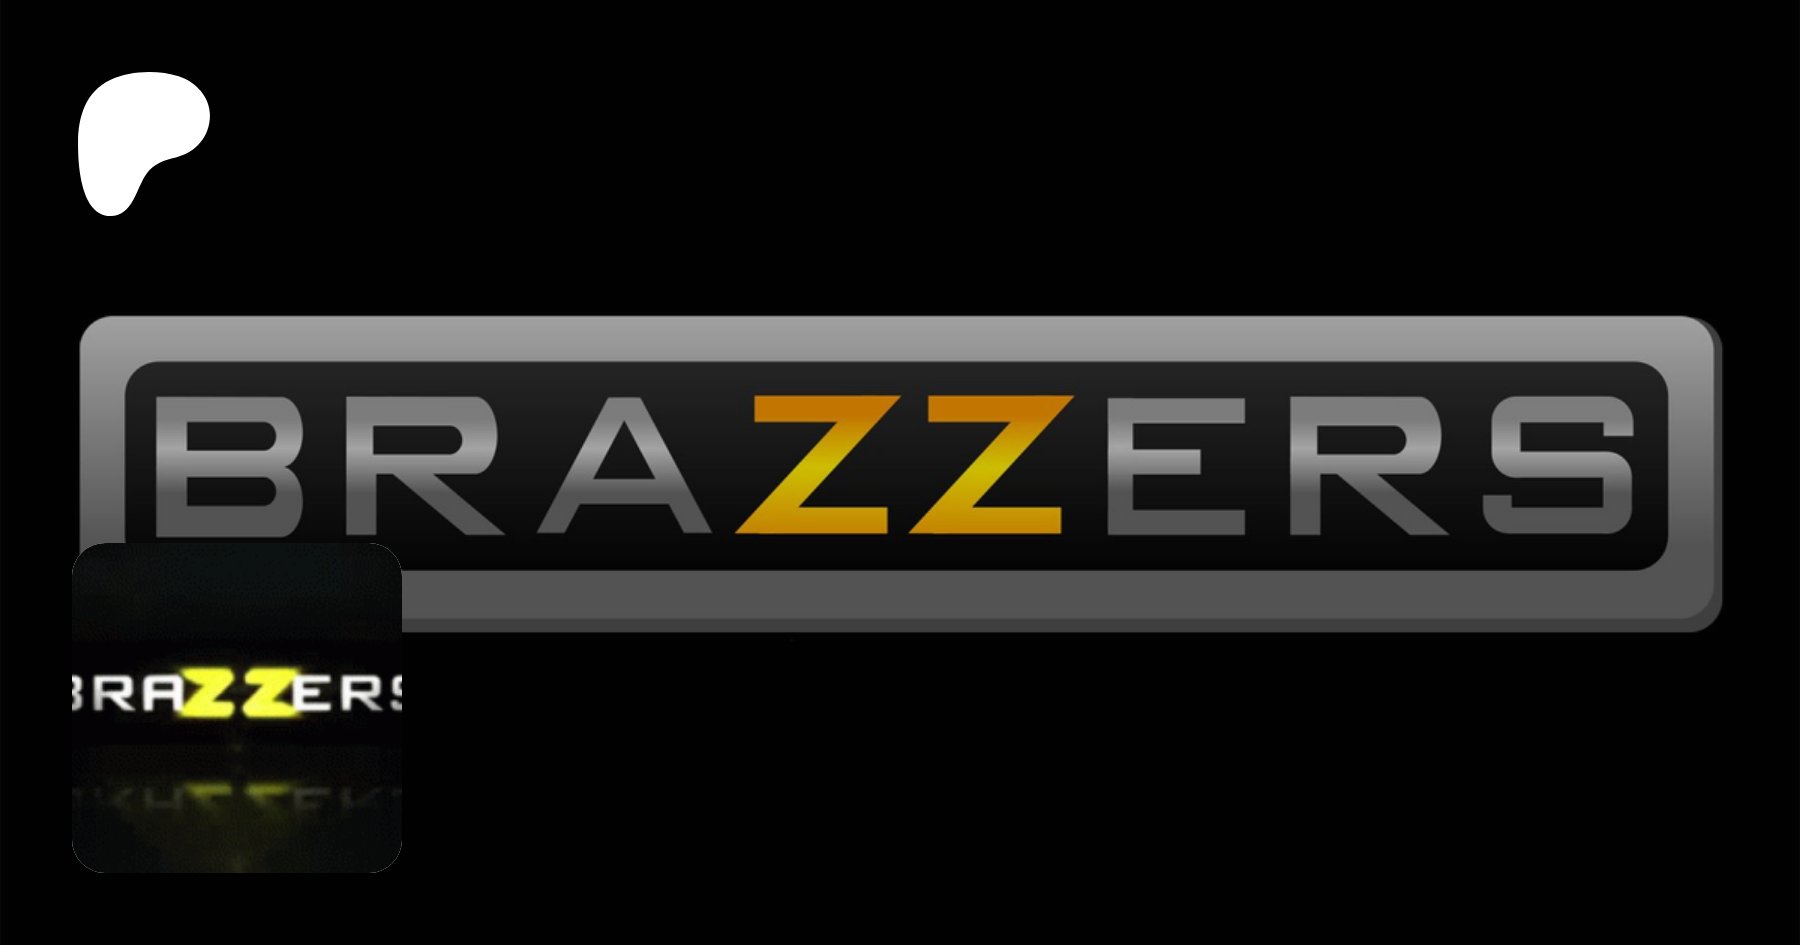 Brazzers discord server